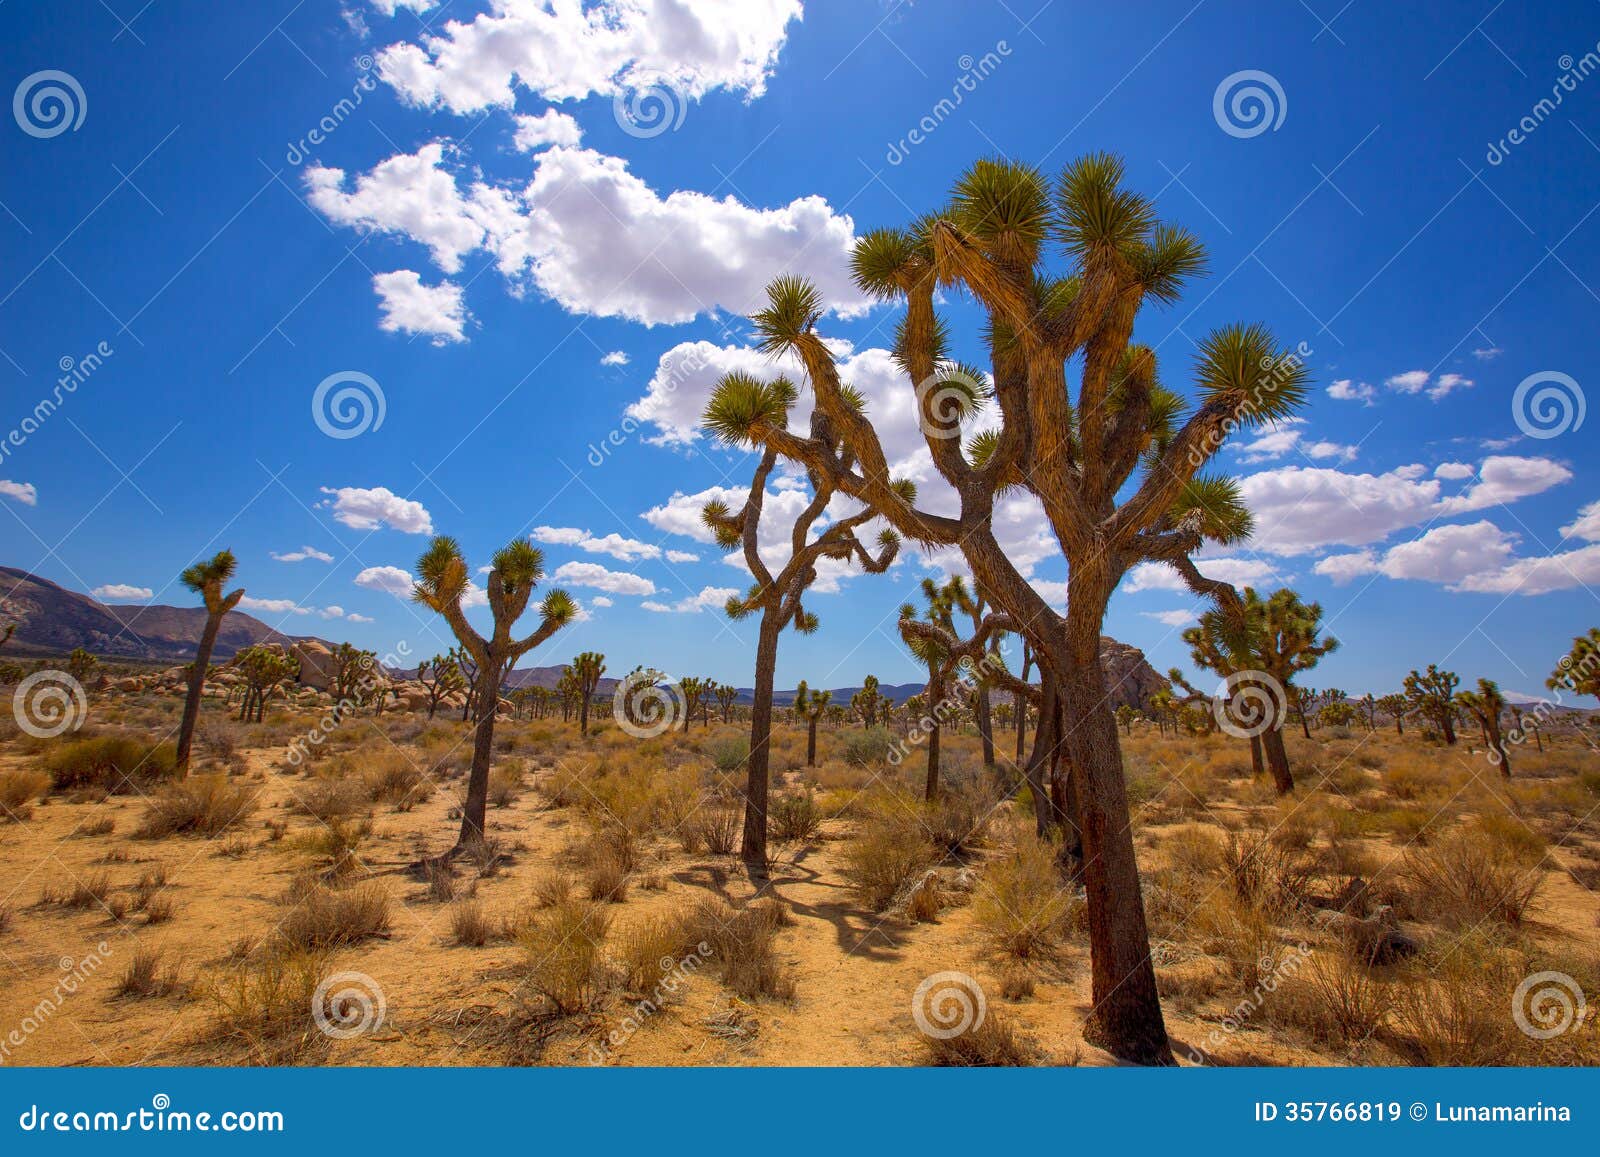 joshua tree national park yucca valley mohave desert california